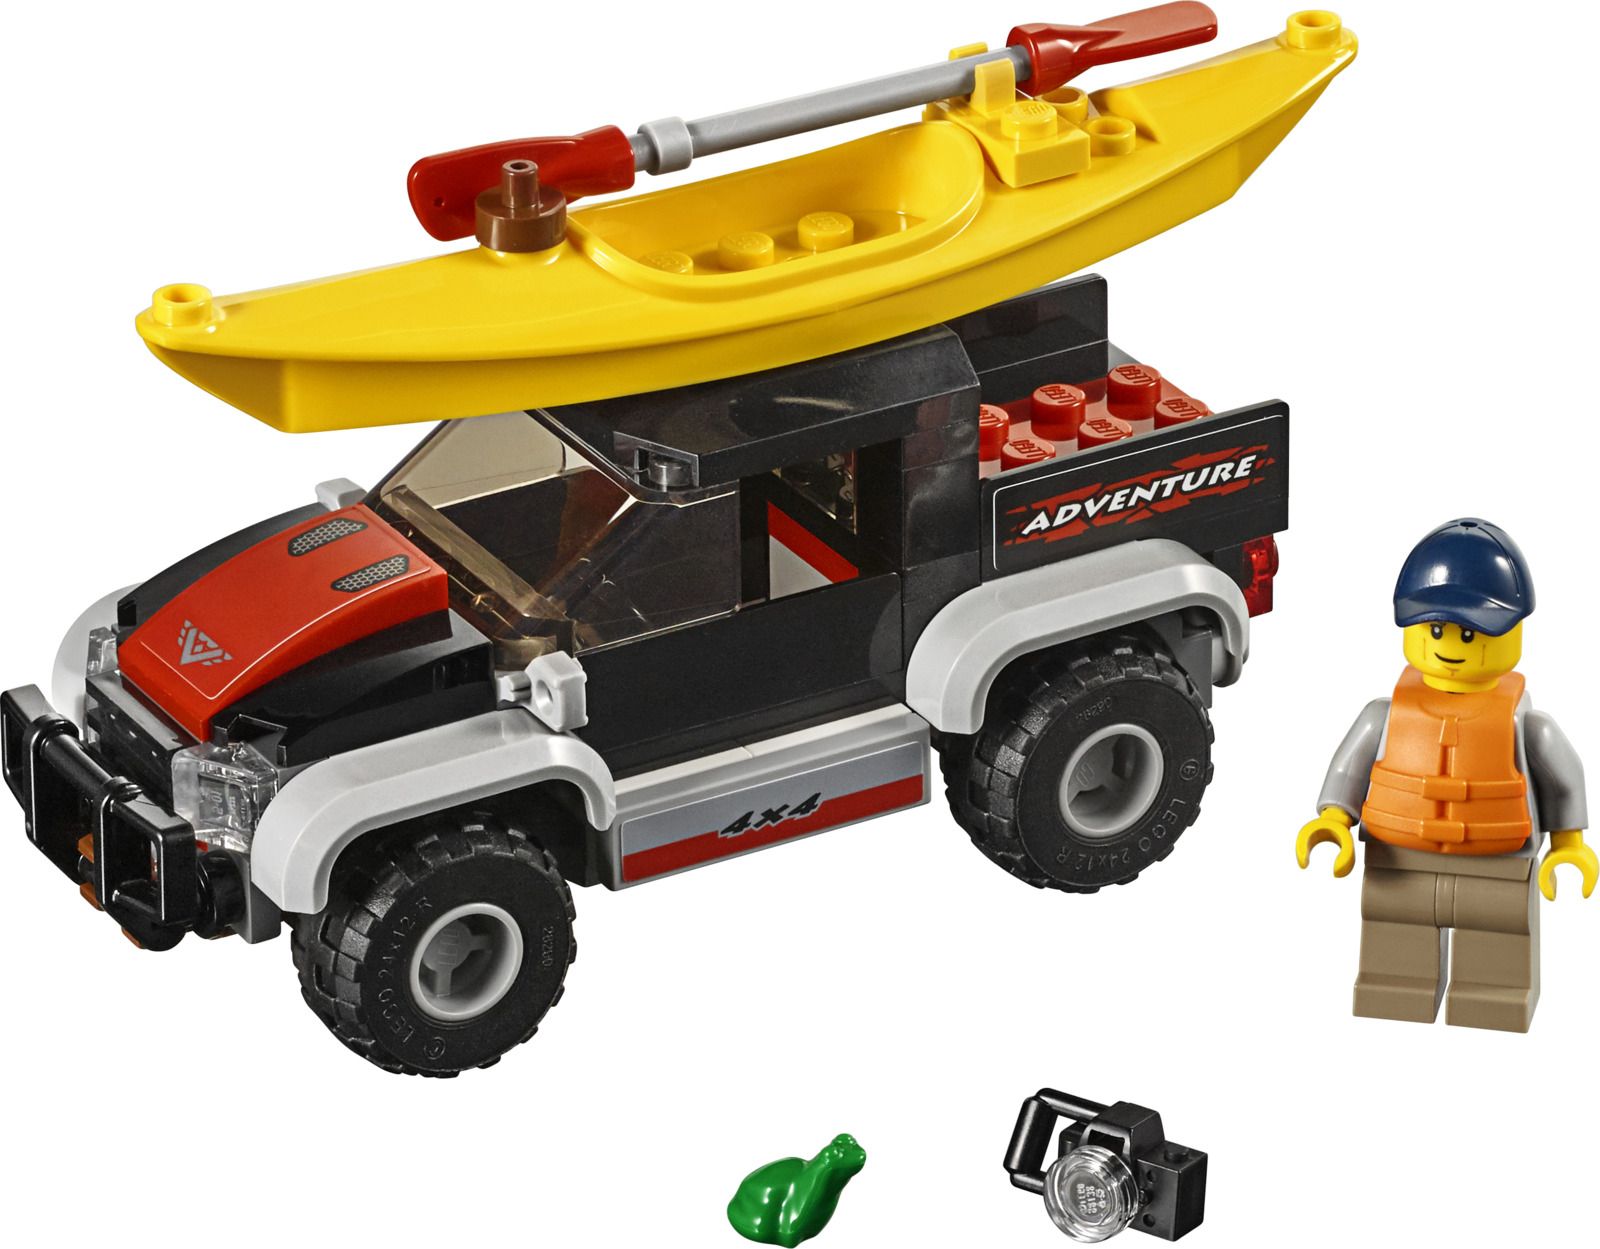 LEGO City Great Vehicles 60240    